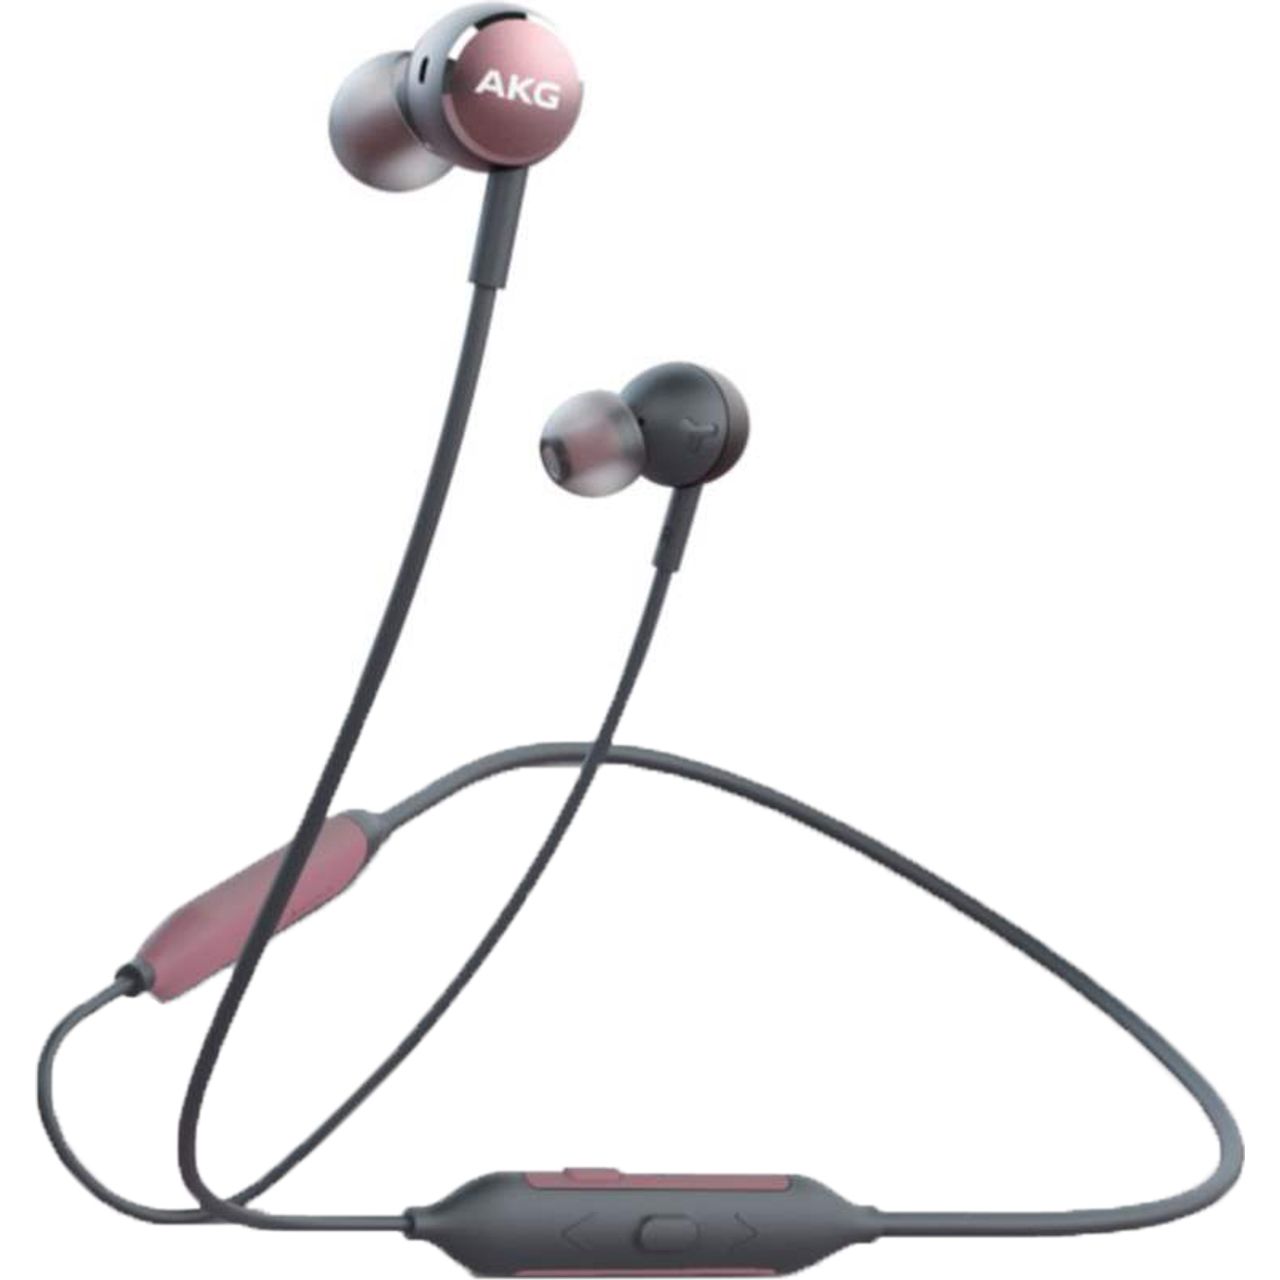 AKG Y100 In-Ear Wireless Bluetooth Headphones Review